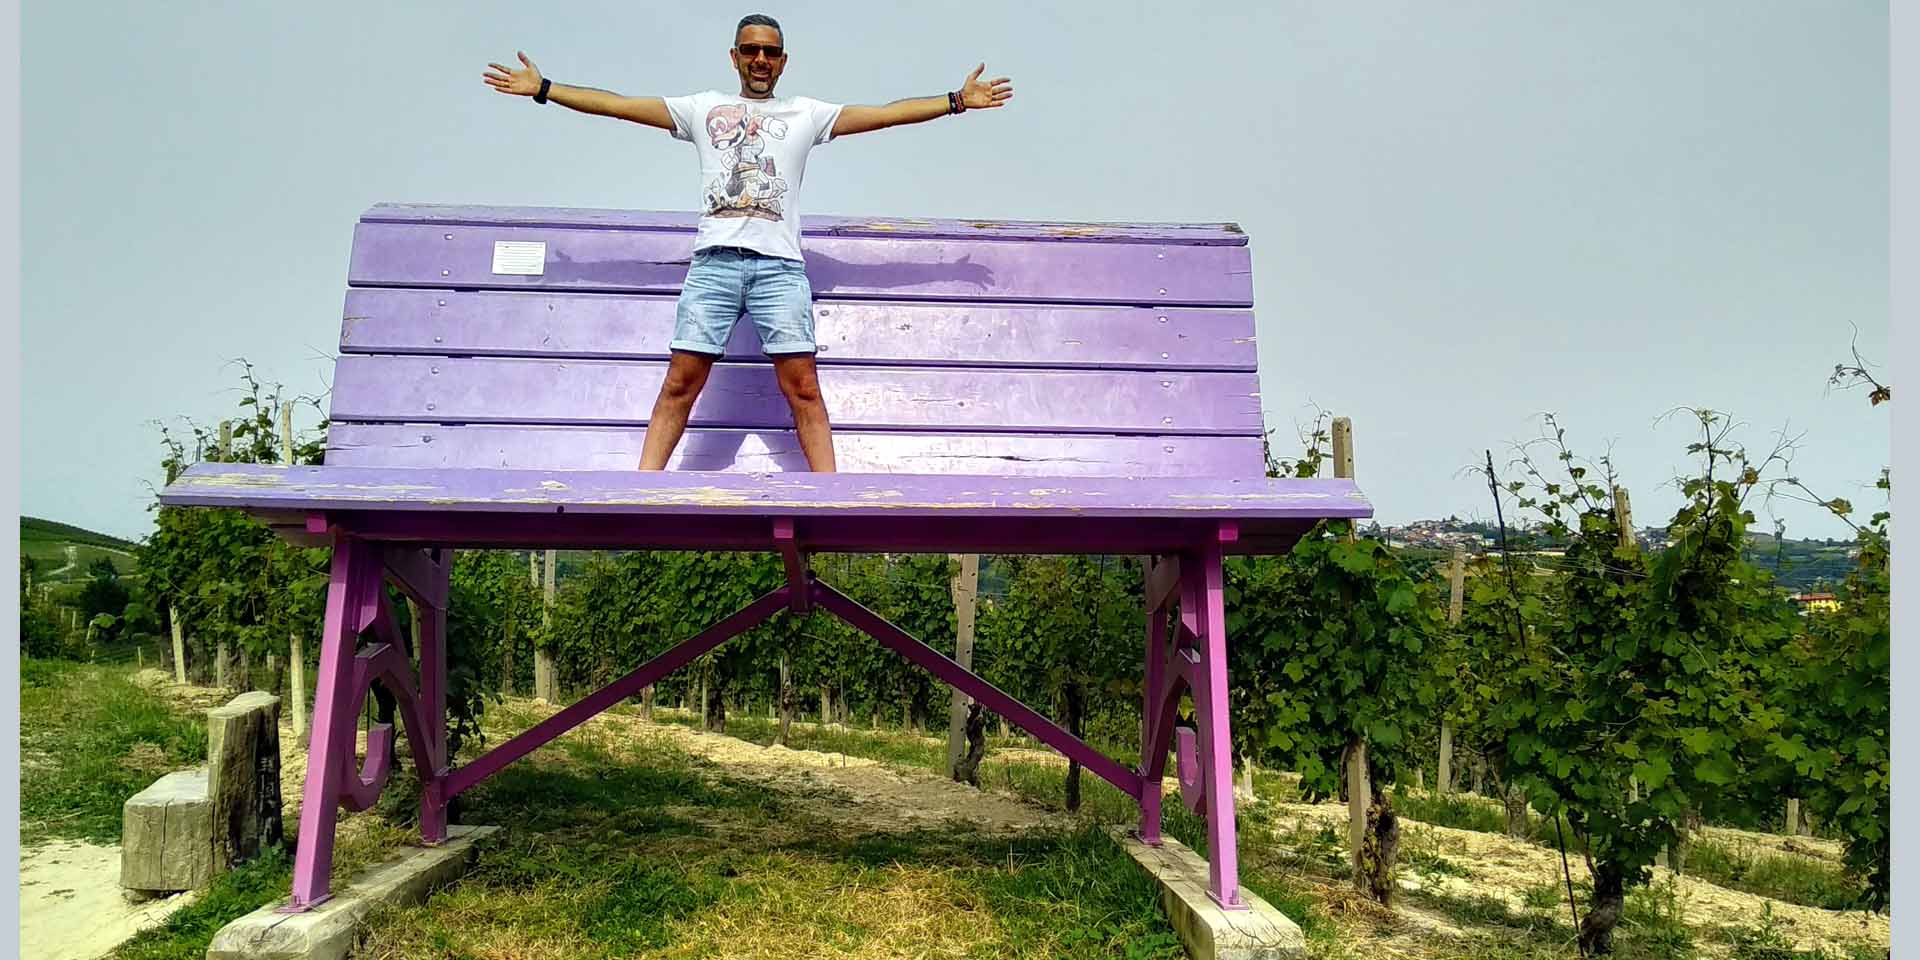 william sulla panchina gigante viola